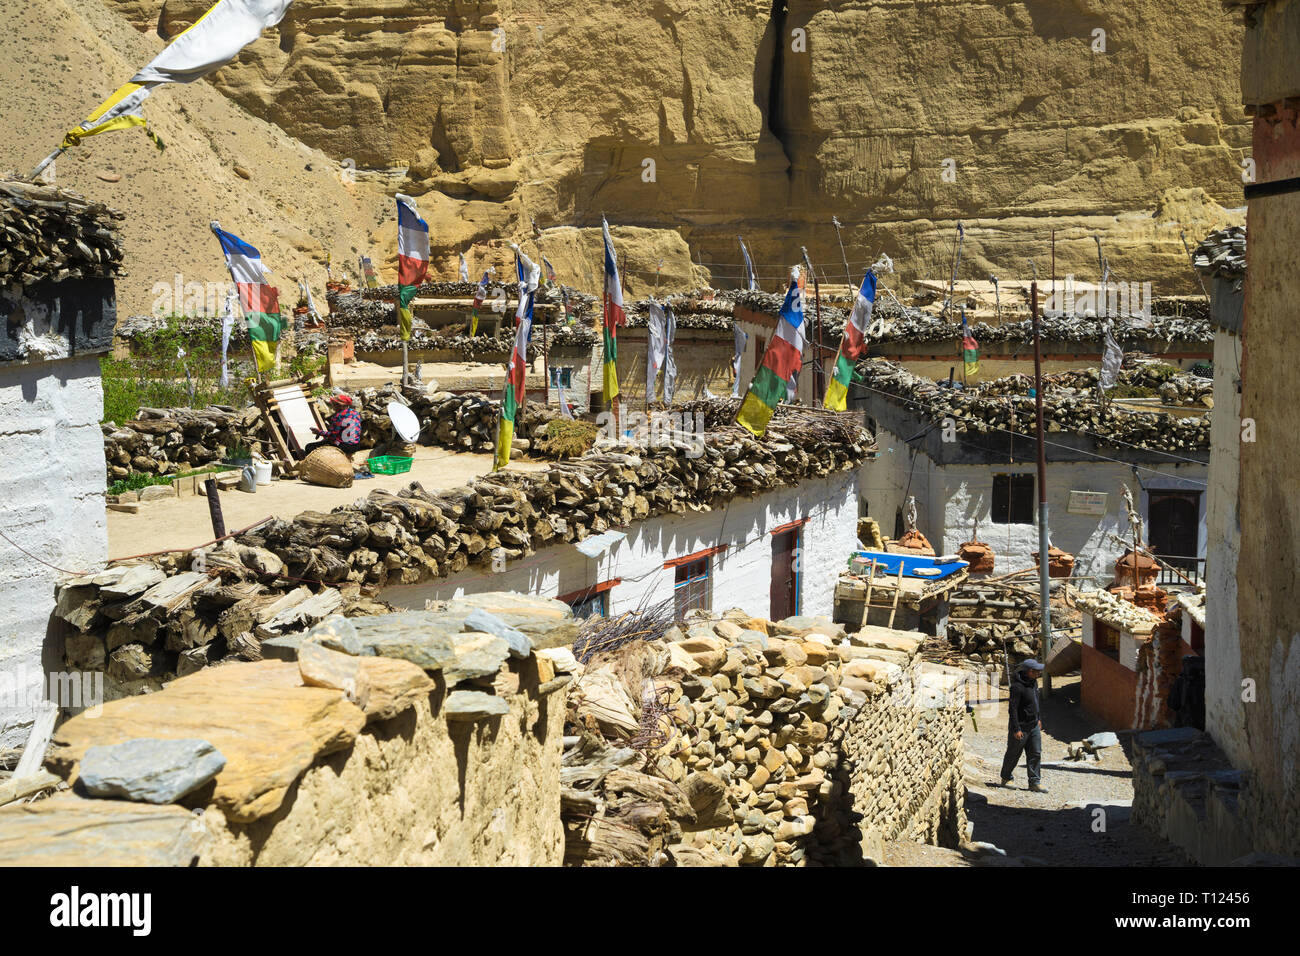 Typical Tibetan village of Chele, Upper Mustang region, NepaL. Stock Photo